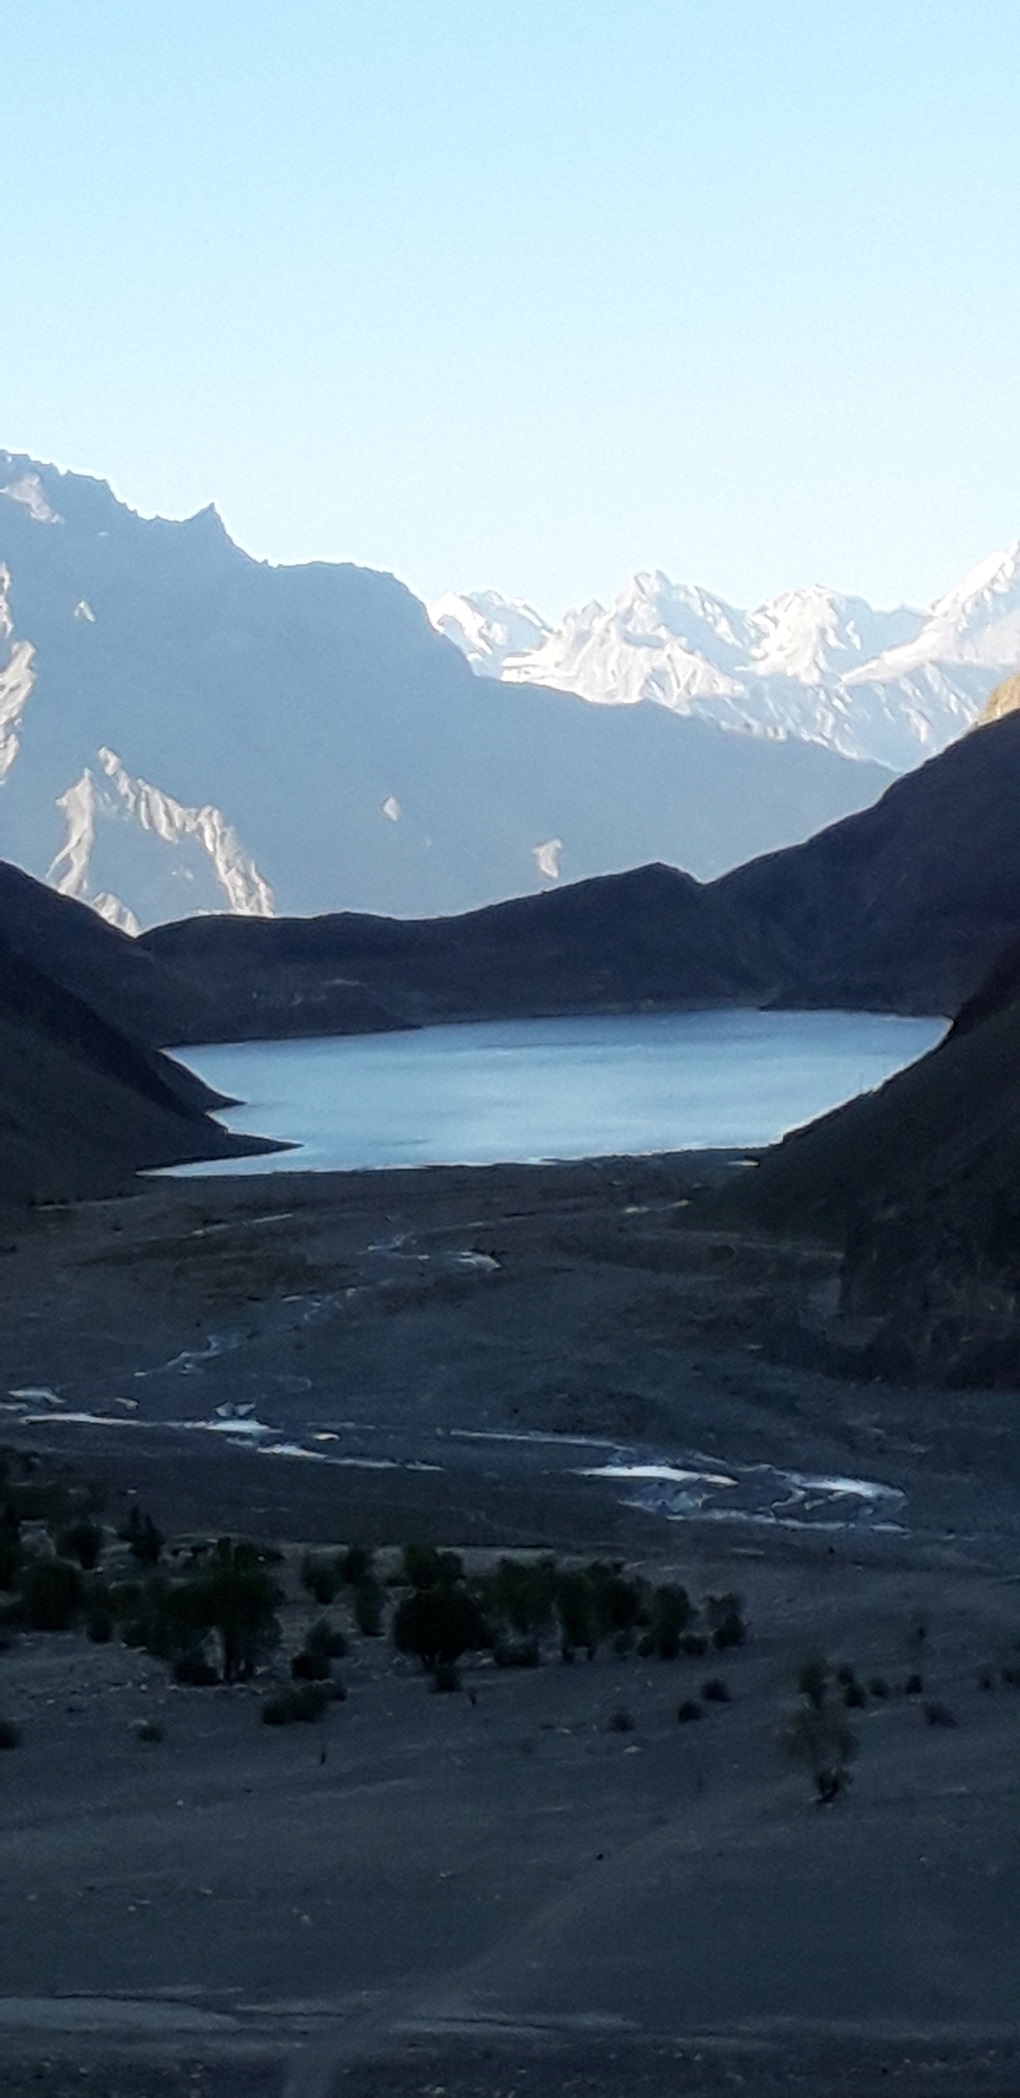 Sadpara lake [image by: Shabina Faraz]